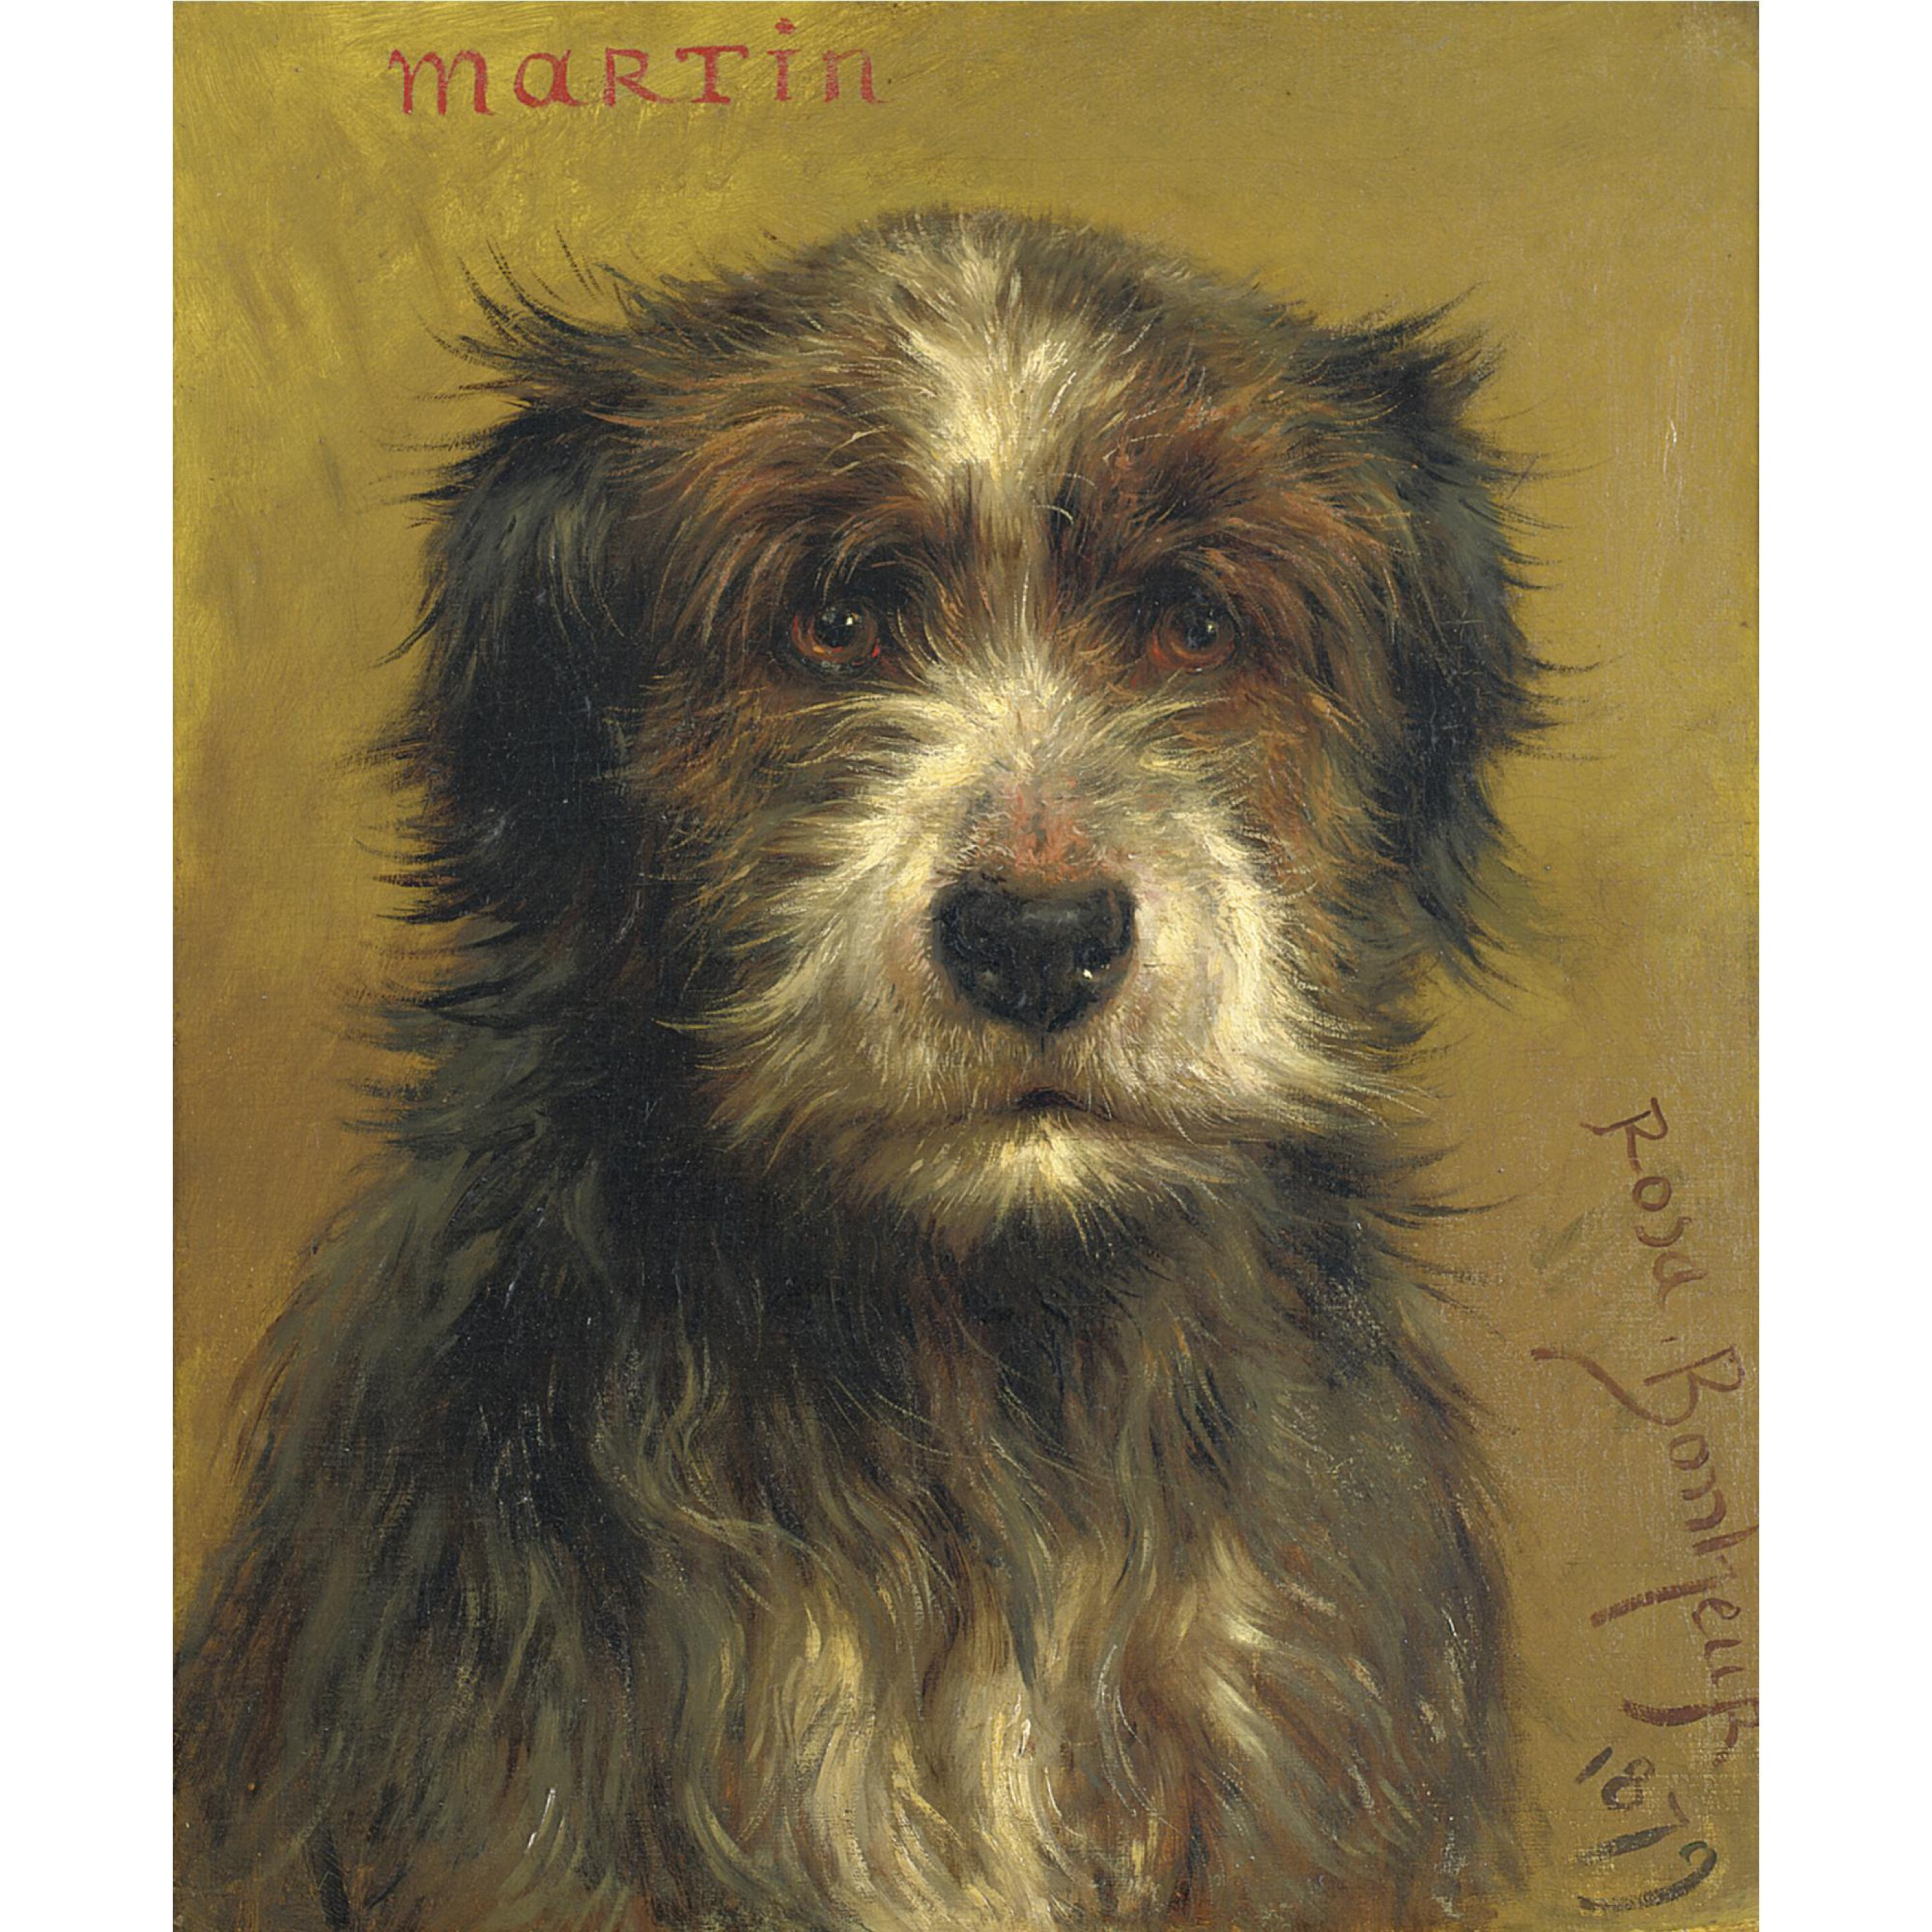 Martin, a terrier by Rosa Bonheur - 1879 - 47 x 37,2 cm 